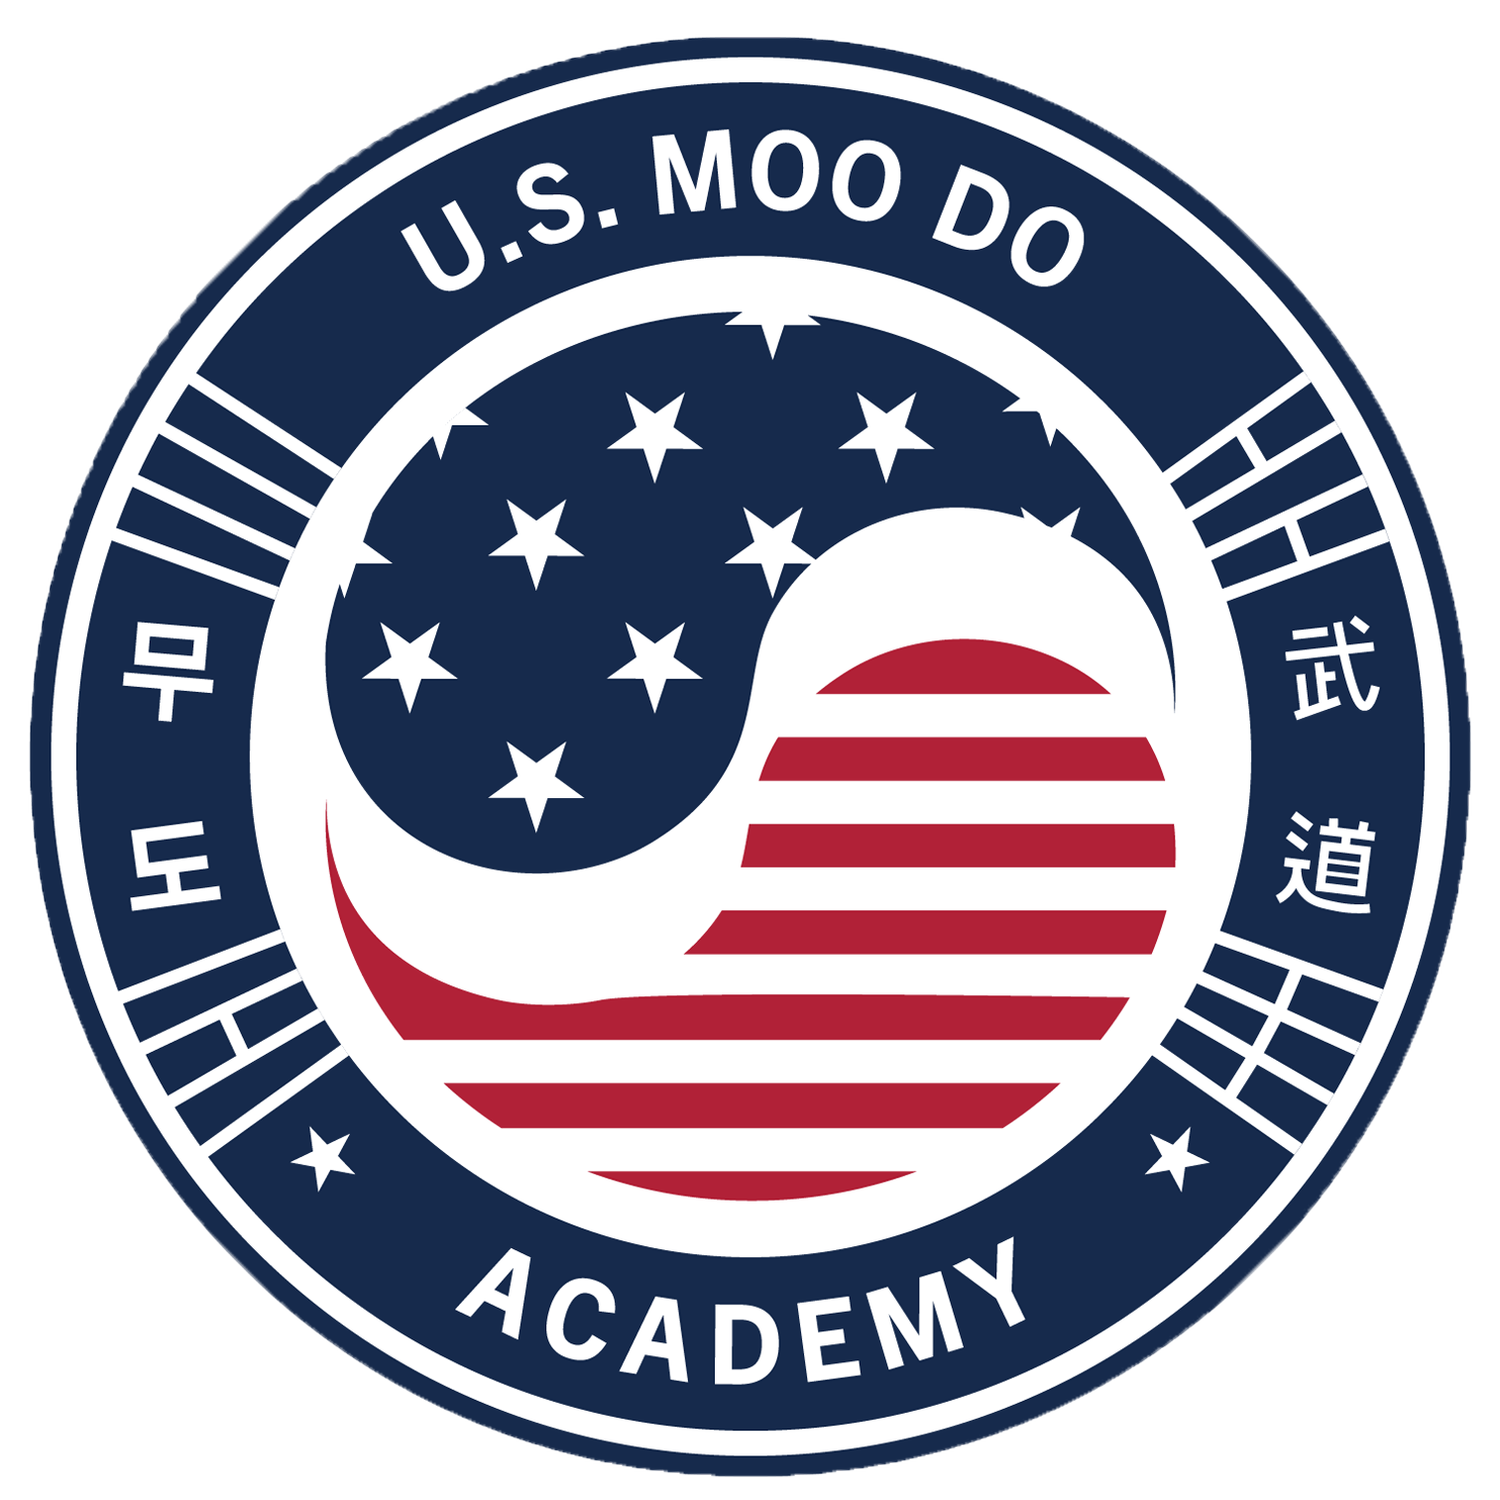 U.S. Moo Do Academy